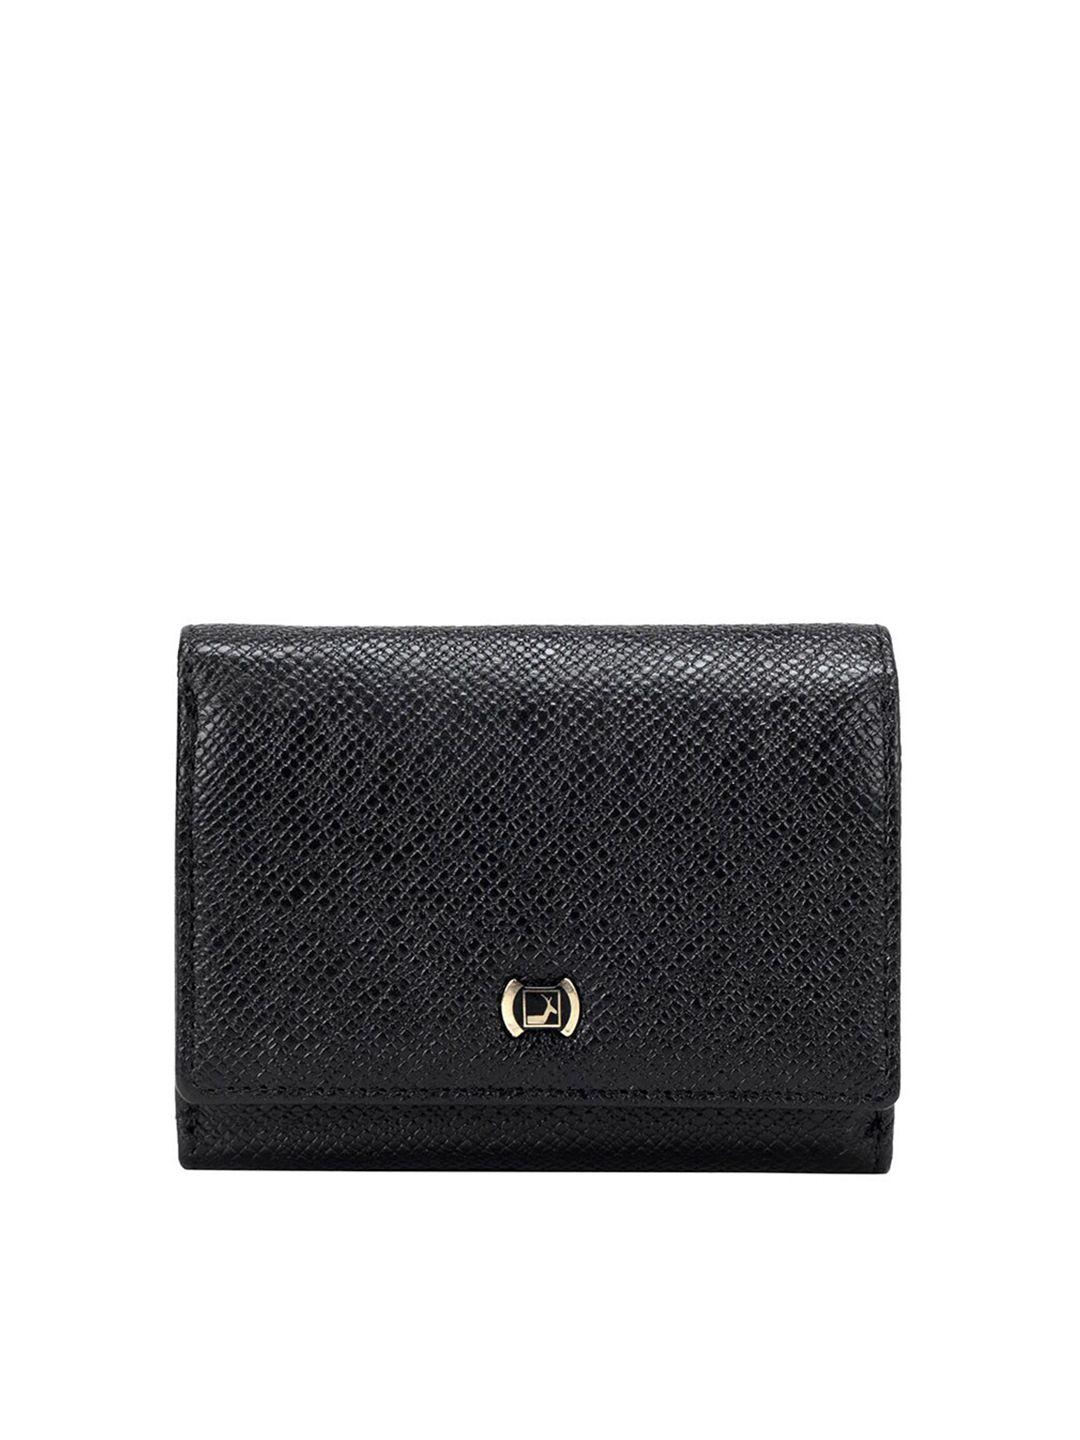 da-milano-women-black-textured-leather-three-fold-wallet